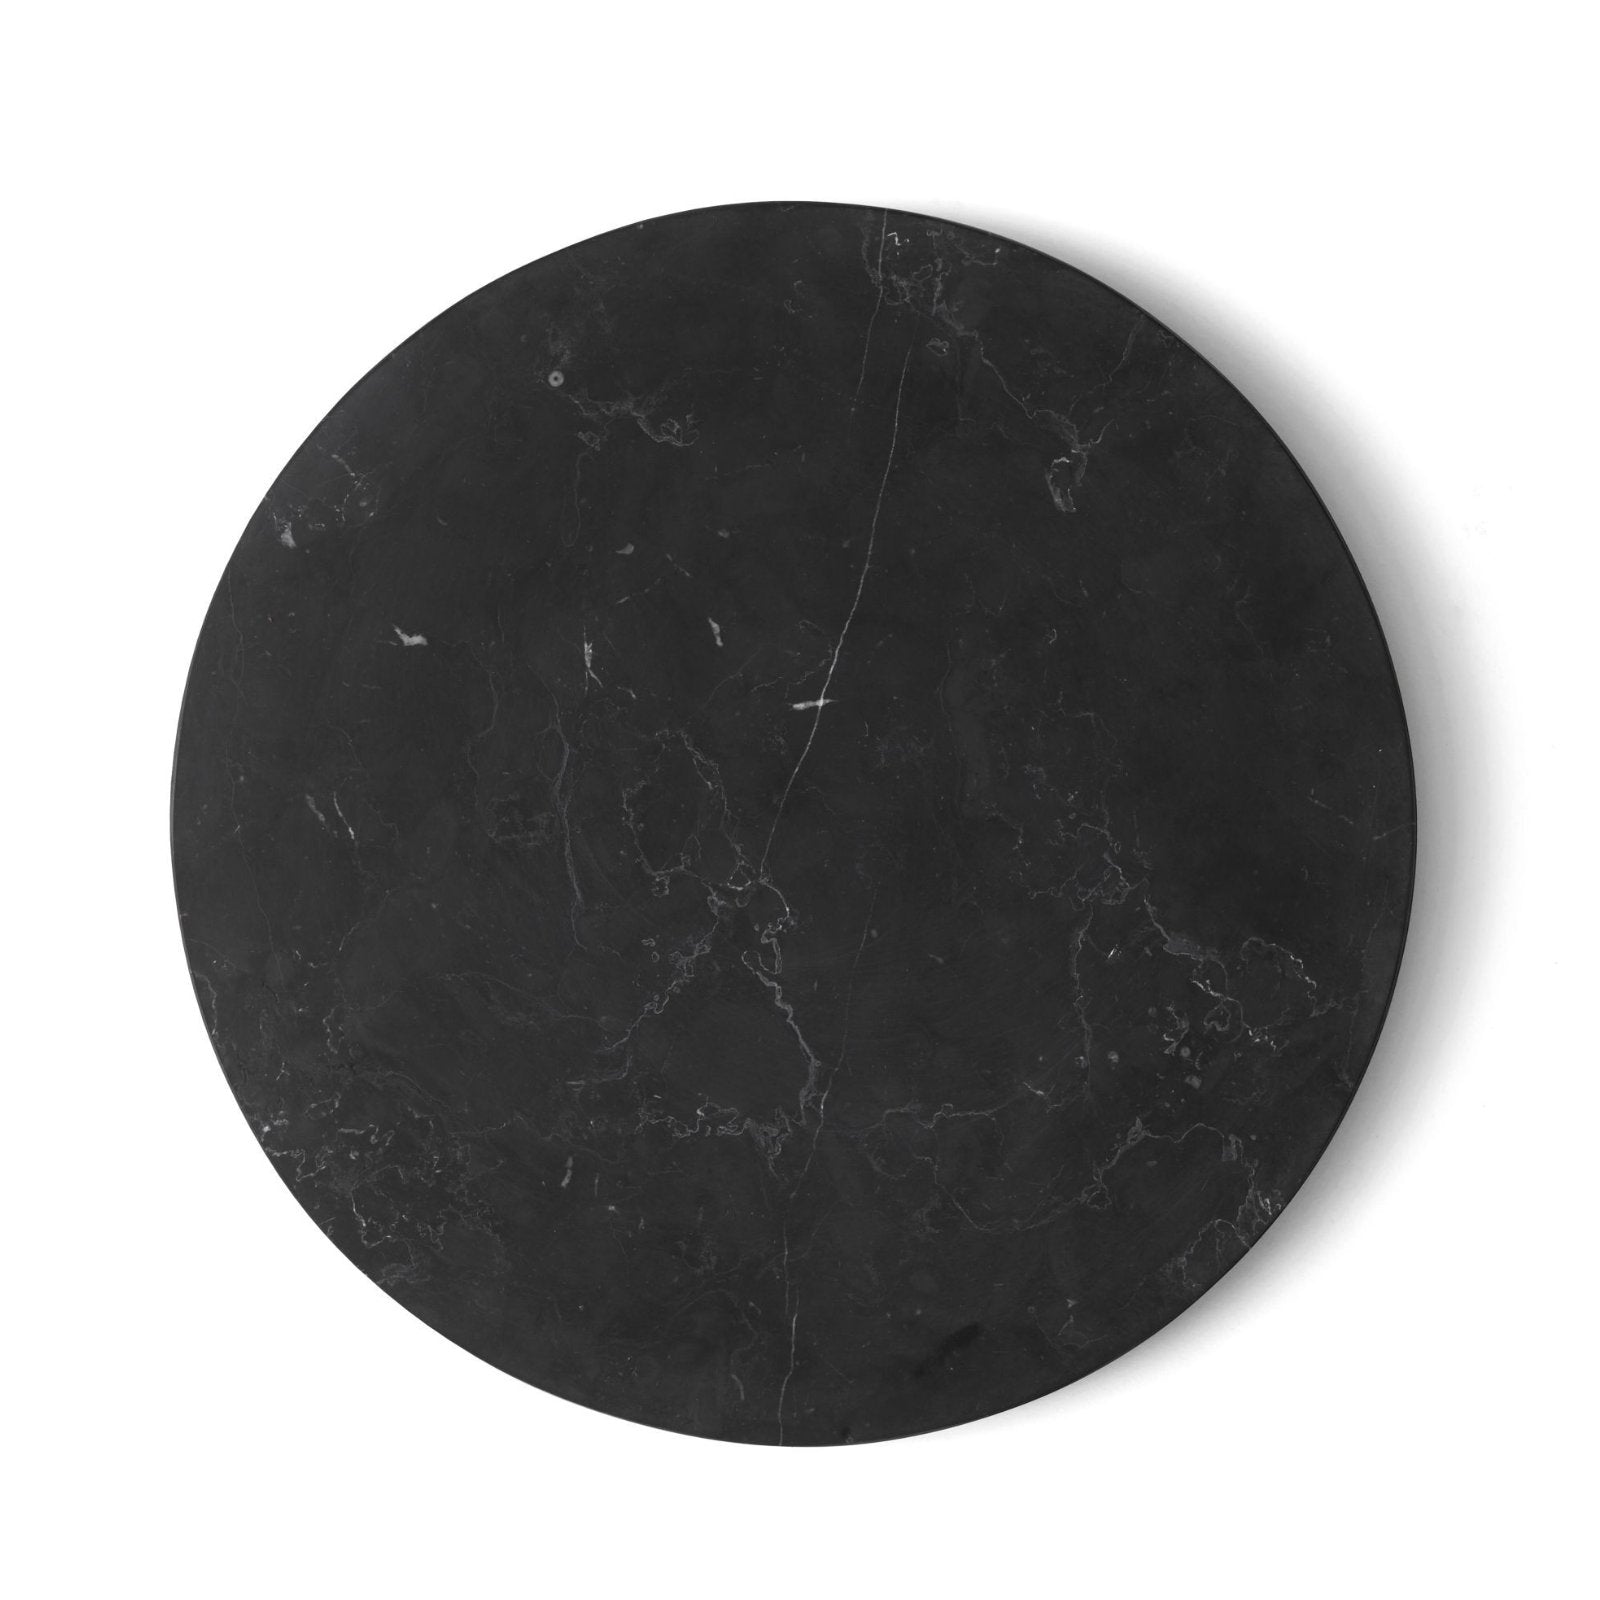 Wire Marble Top in Black design by Menu